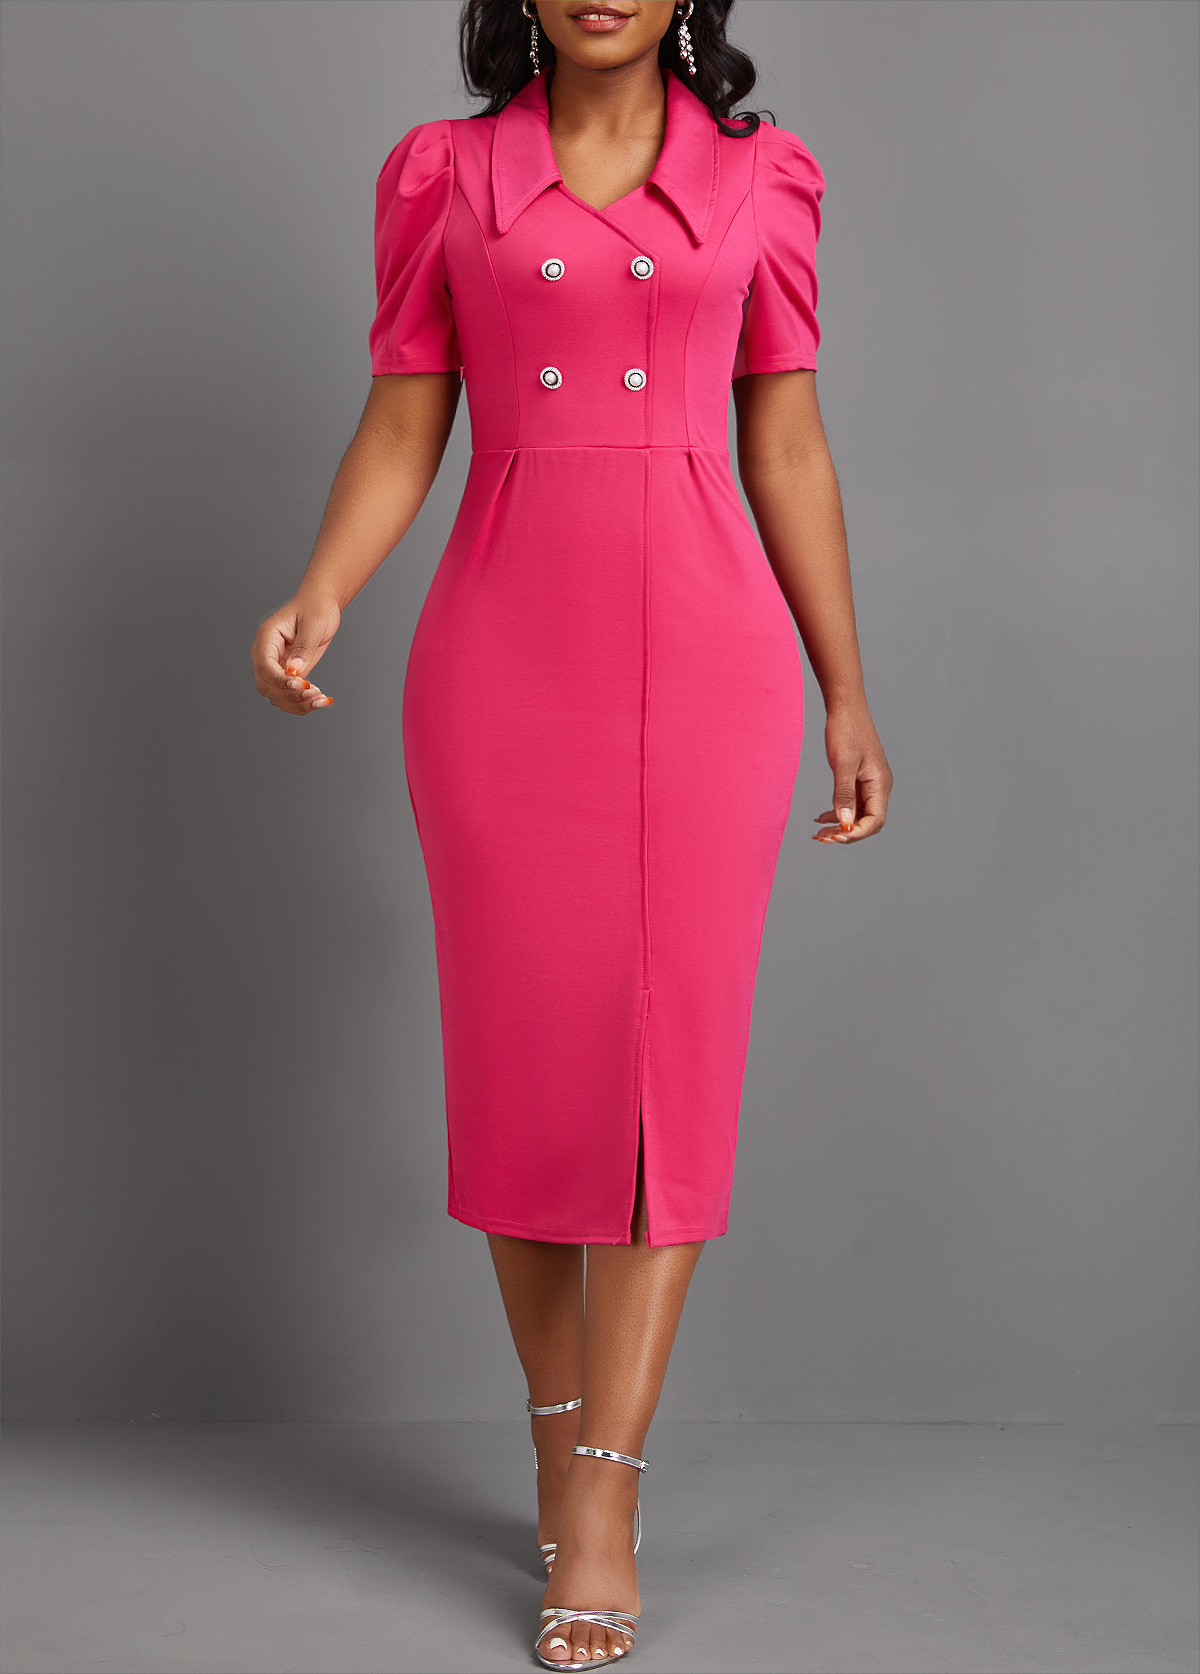 Hot Pink Button Short Sleeve Bodycon Dress